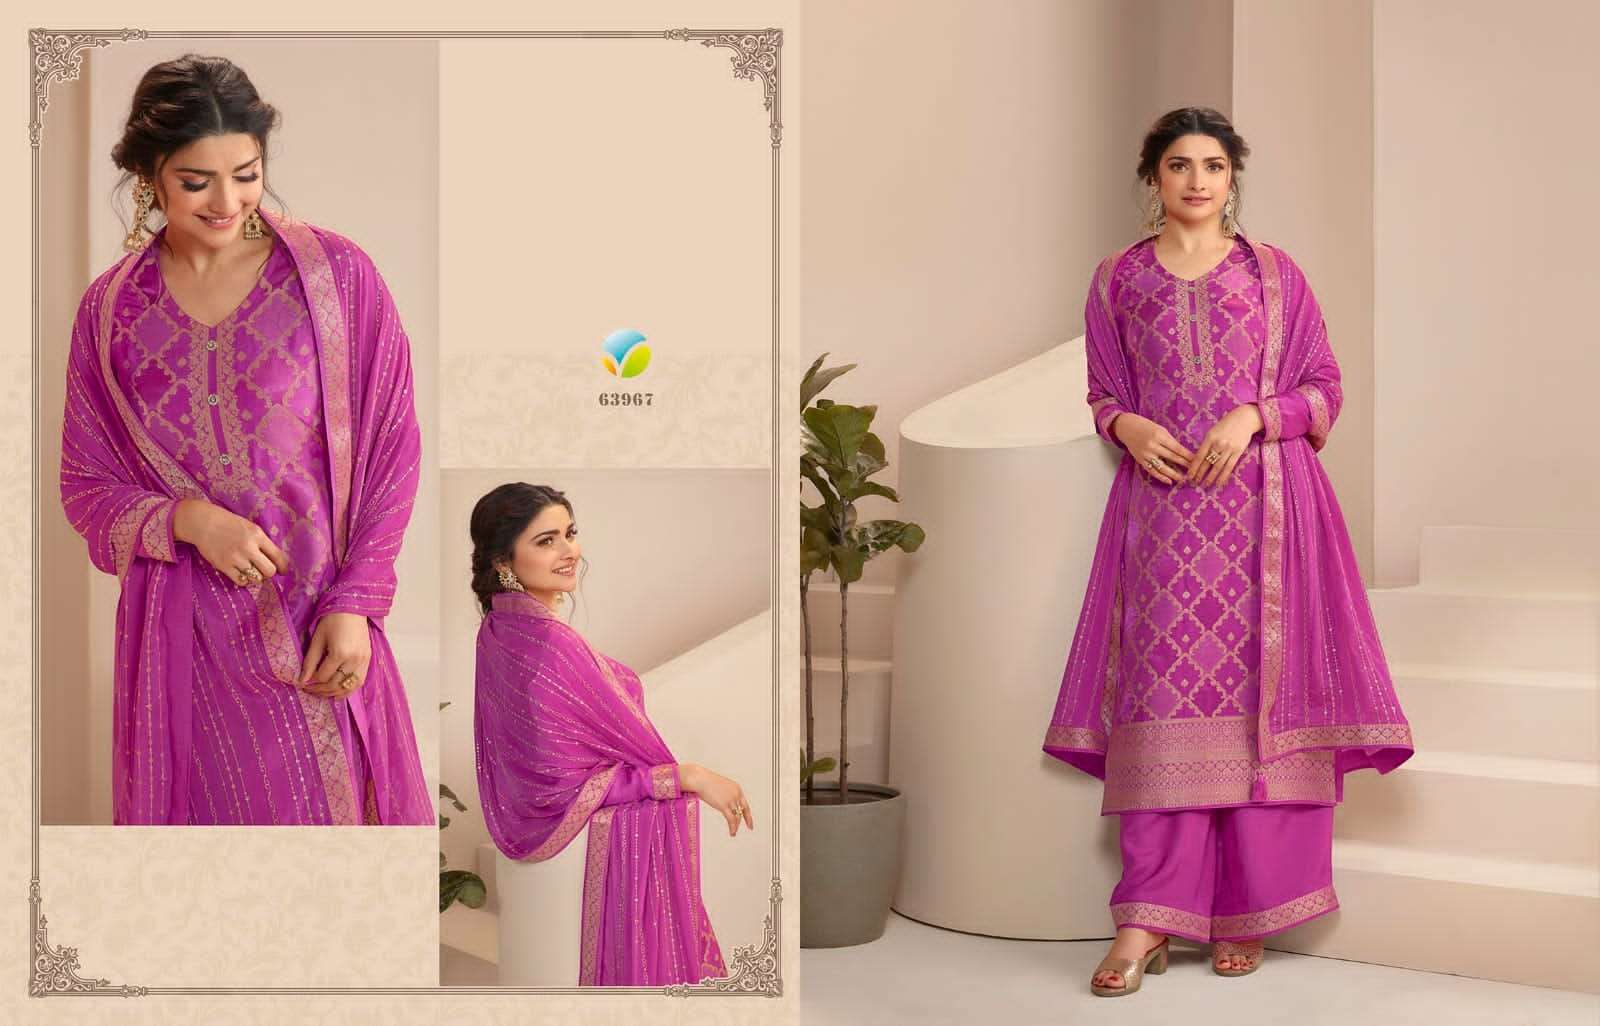 vinay fashion kaseesh saavi 63961-63967 series fancy dola jaqaurd designer salwar kameez surat 